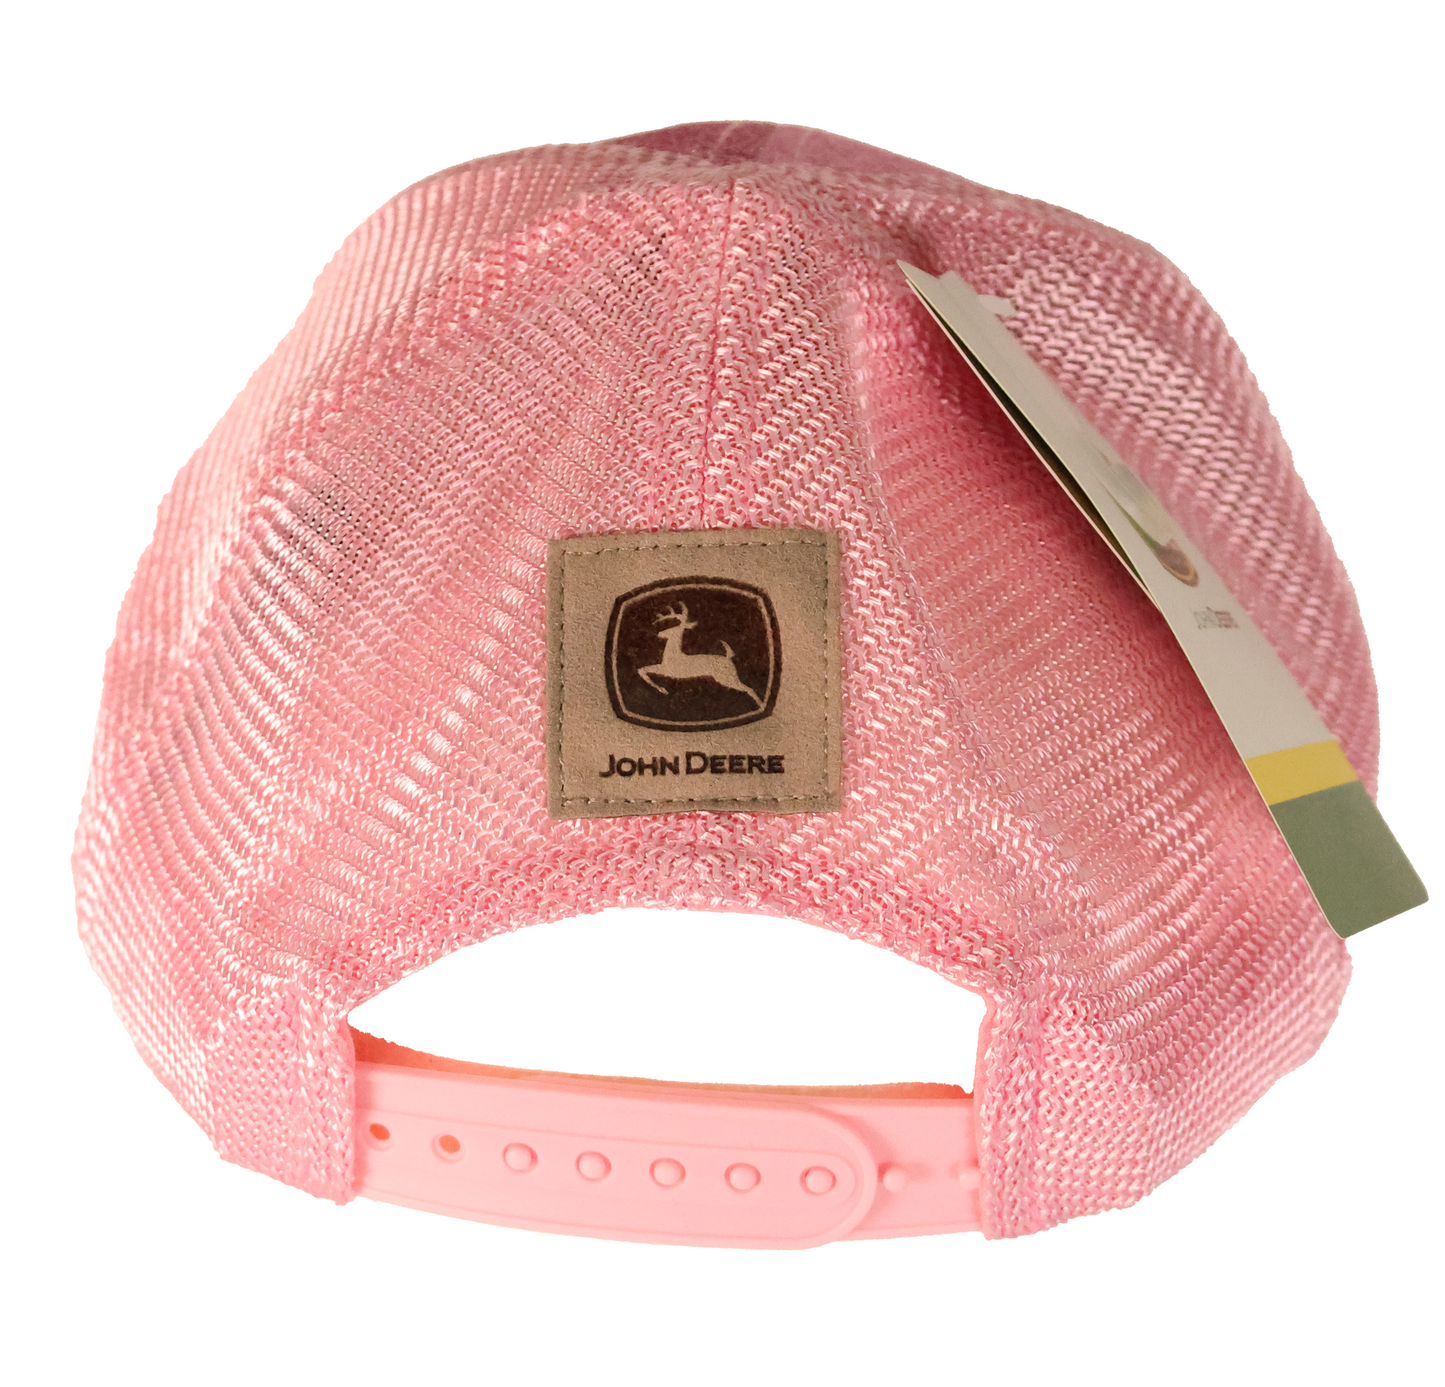 John Deere Toddler Pink Glitter Historic Trade Mark Cap - LP78673